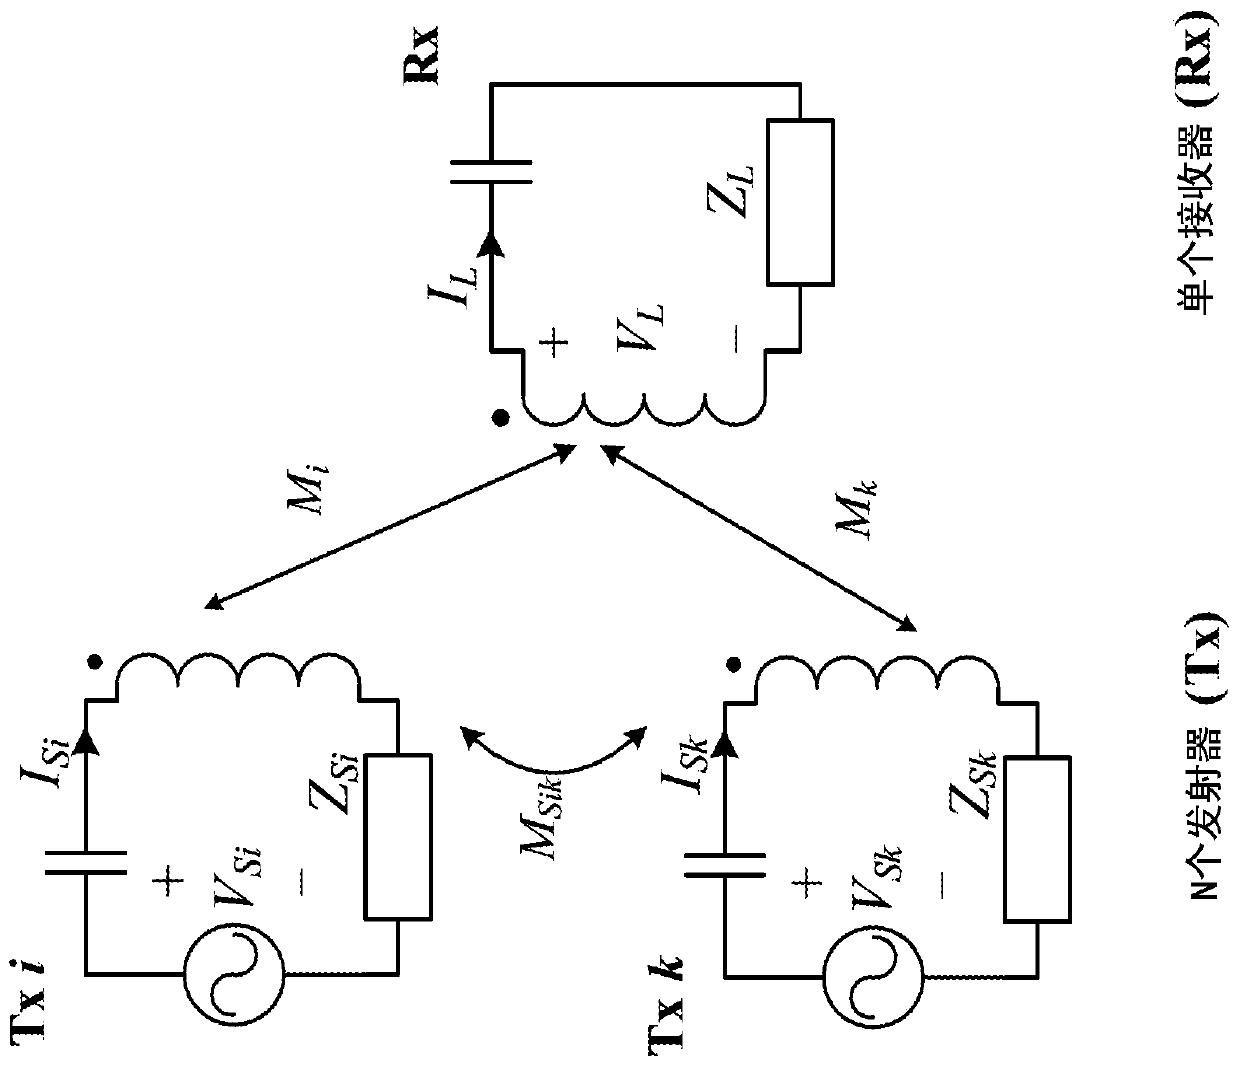 Adaptive Control for Wireless Power Transfer